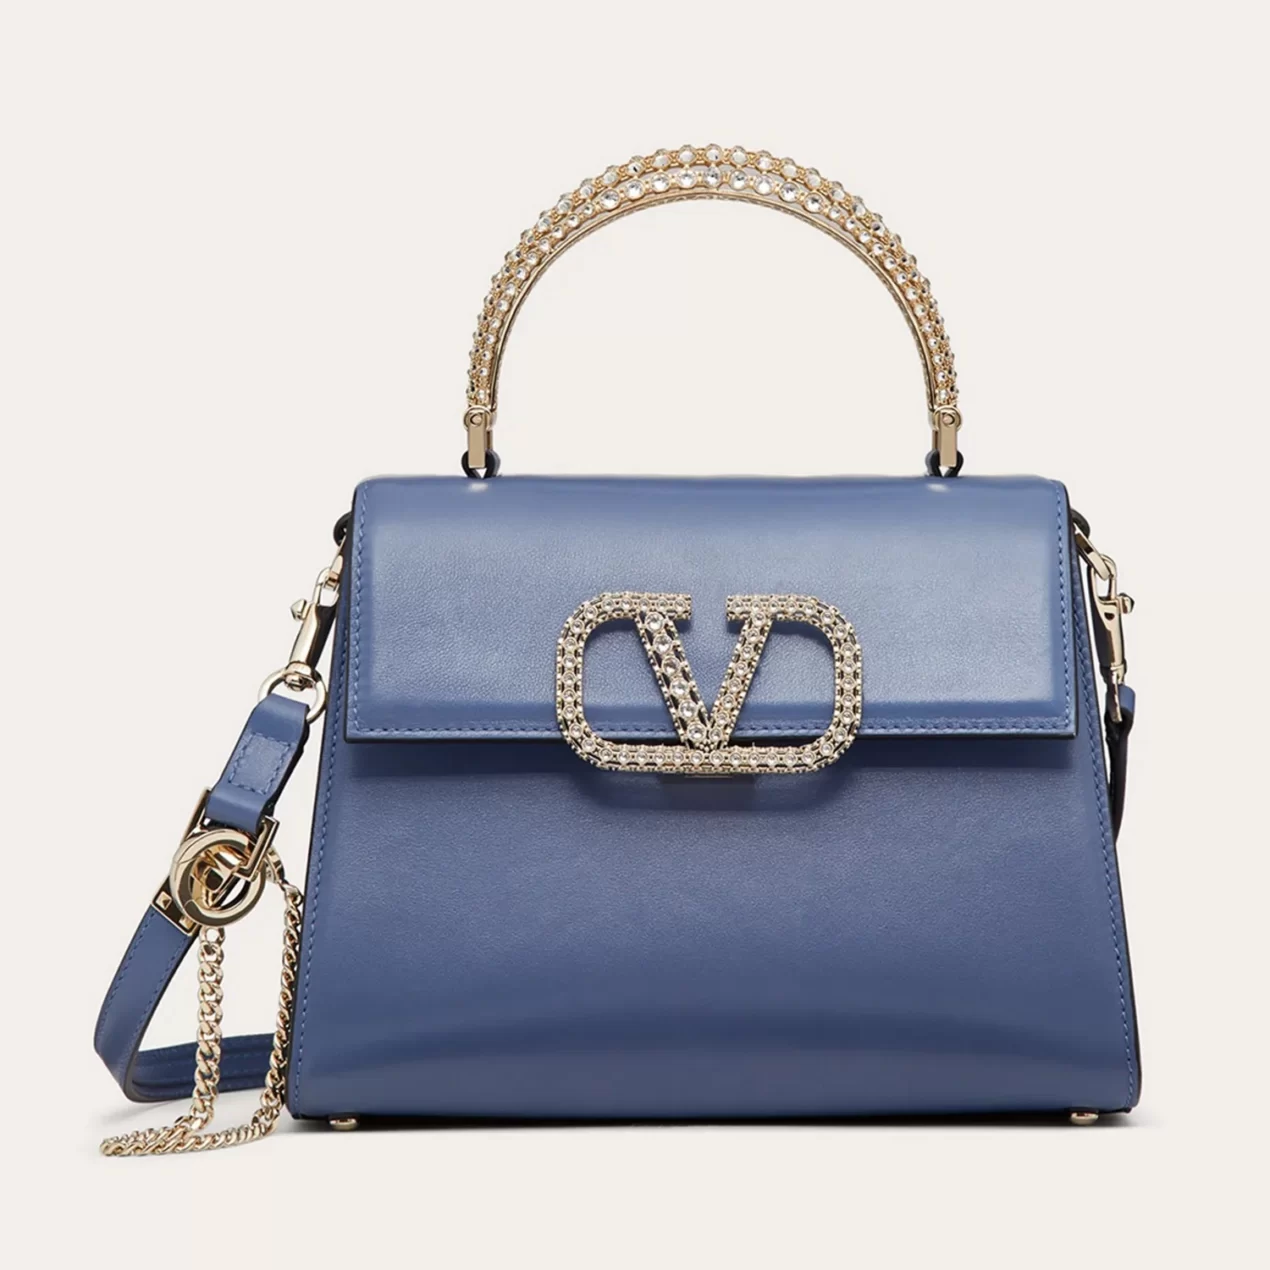 Luxury Valentino Garavani handbags to invest in this season